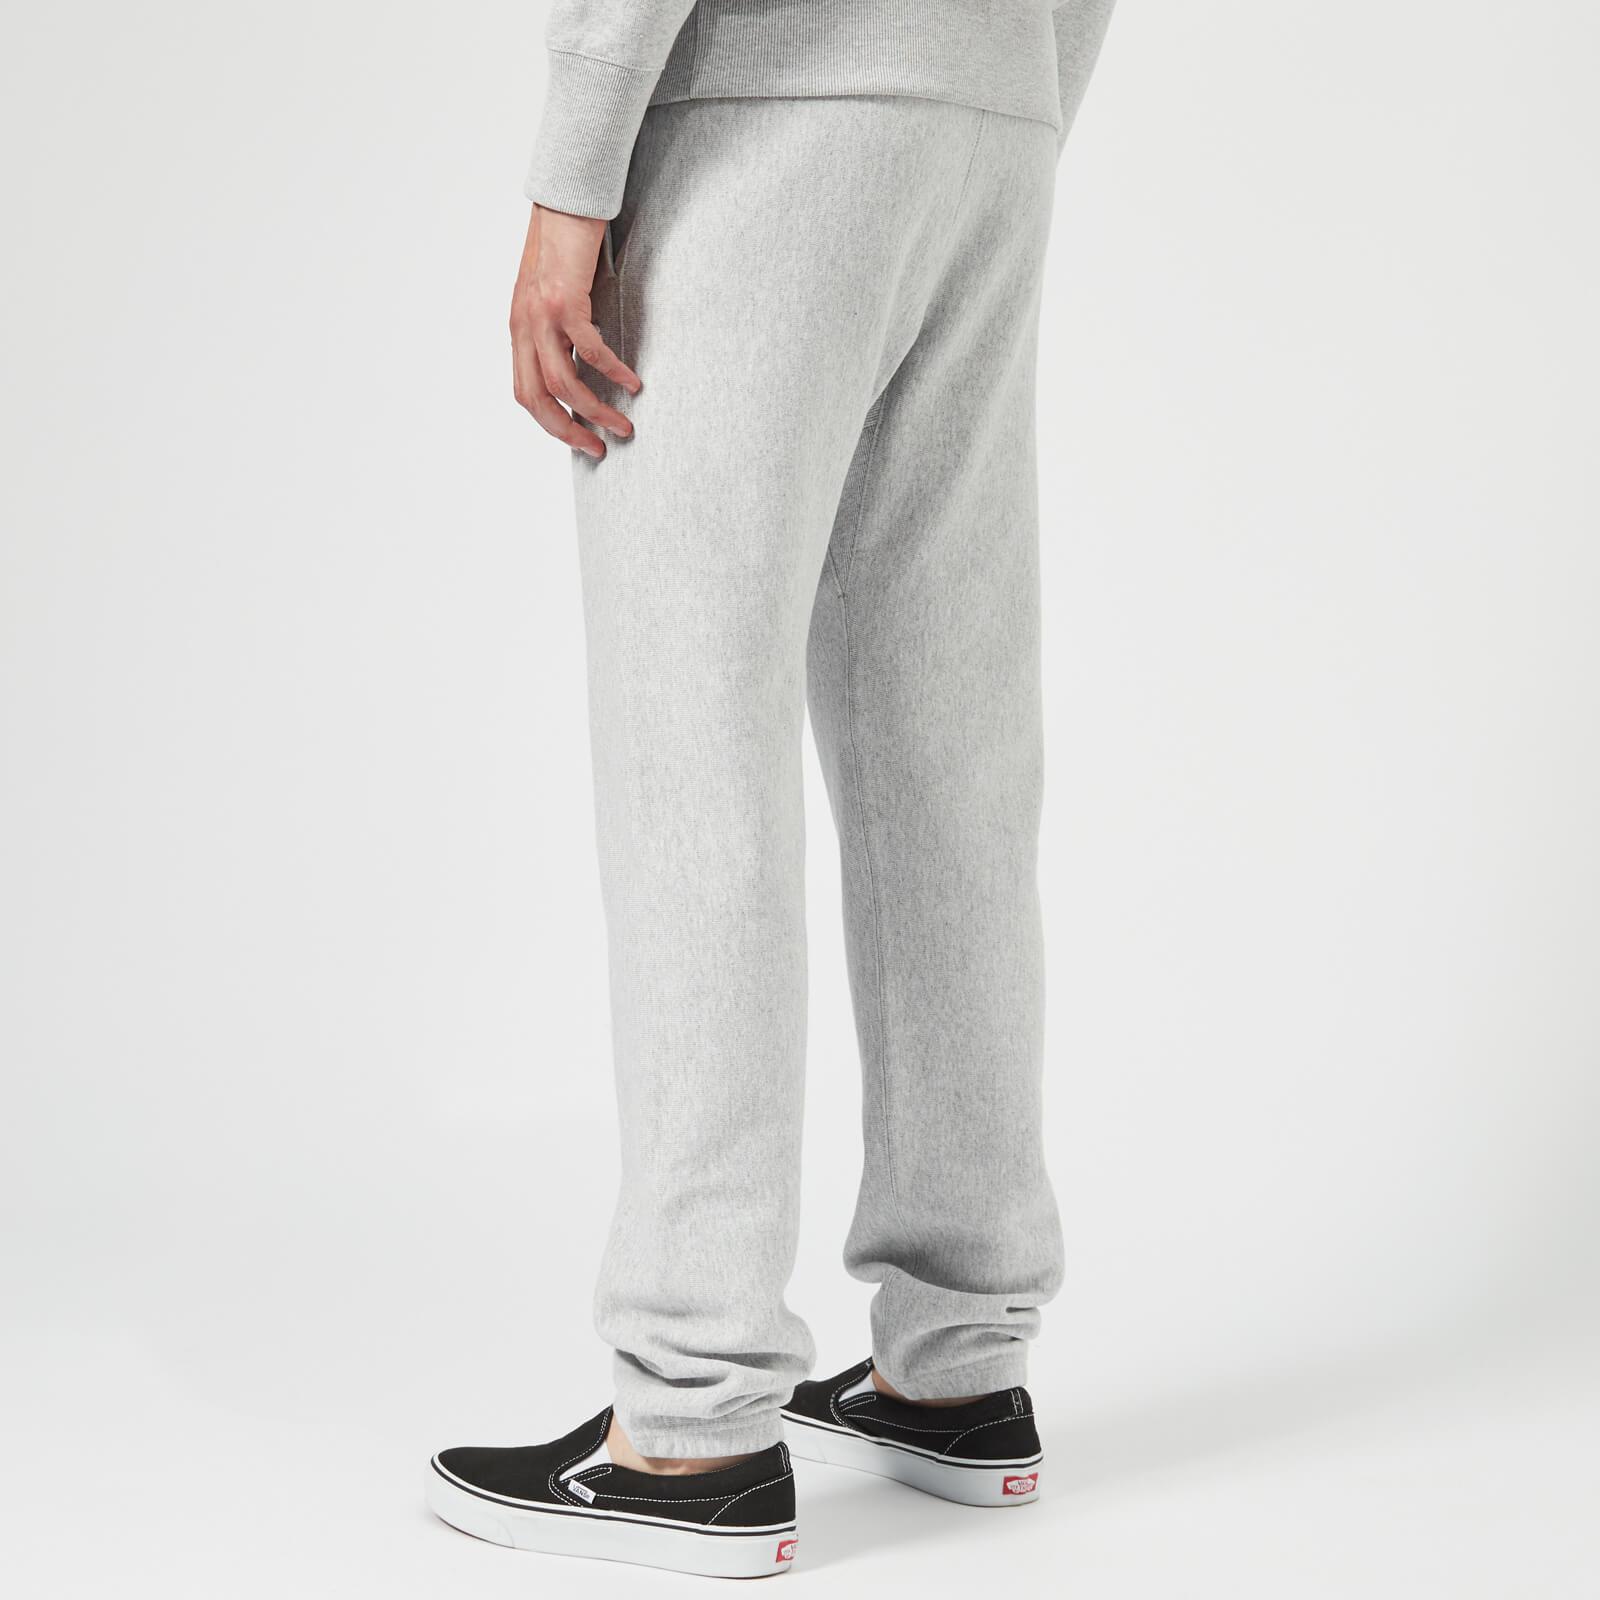 Champion Cotton Elastic Cuff Sweatpants in Grey (Gray) for Men - Lyst